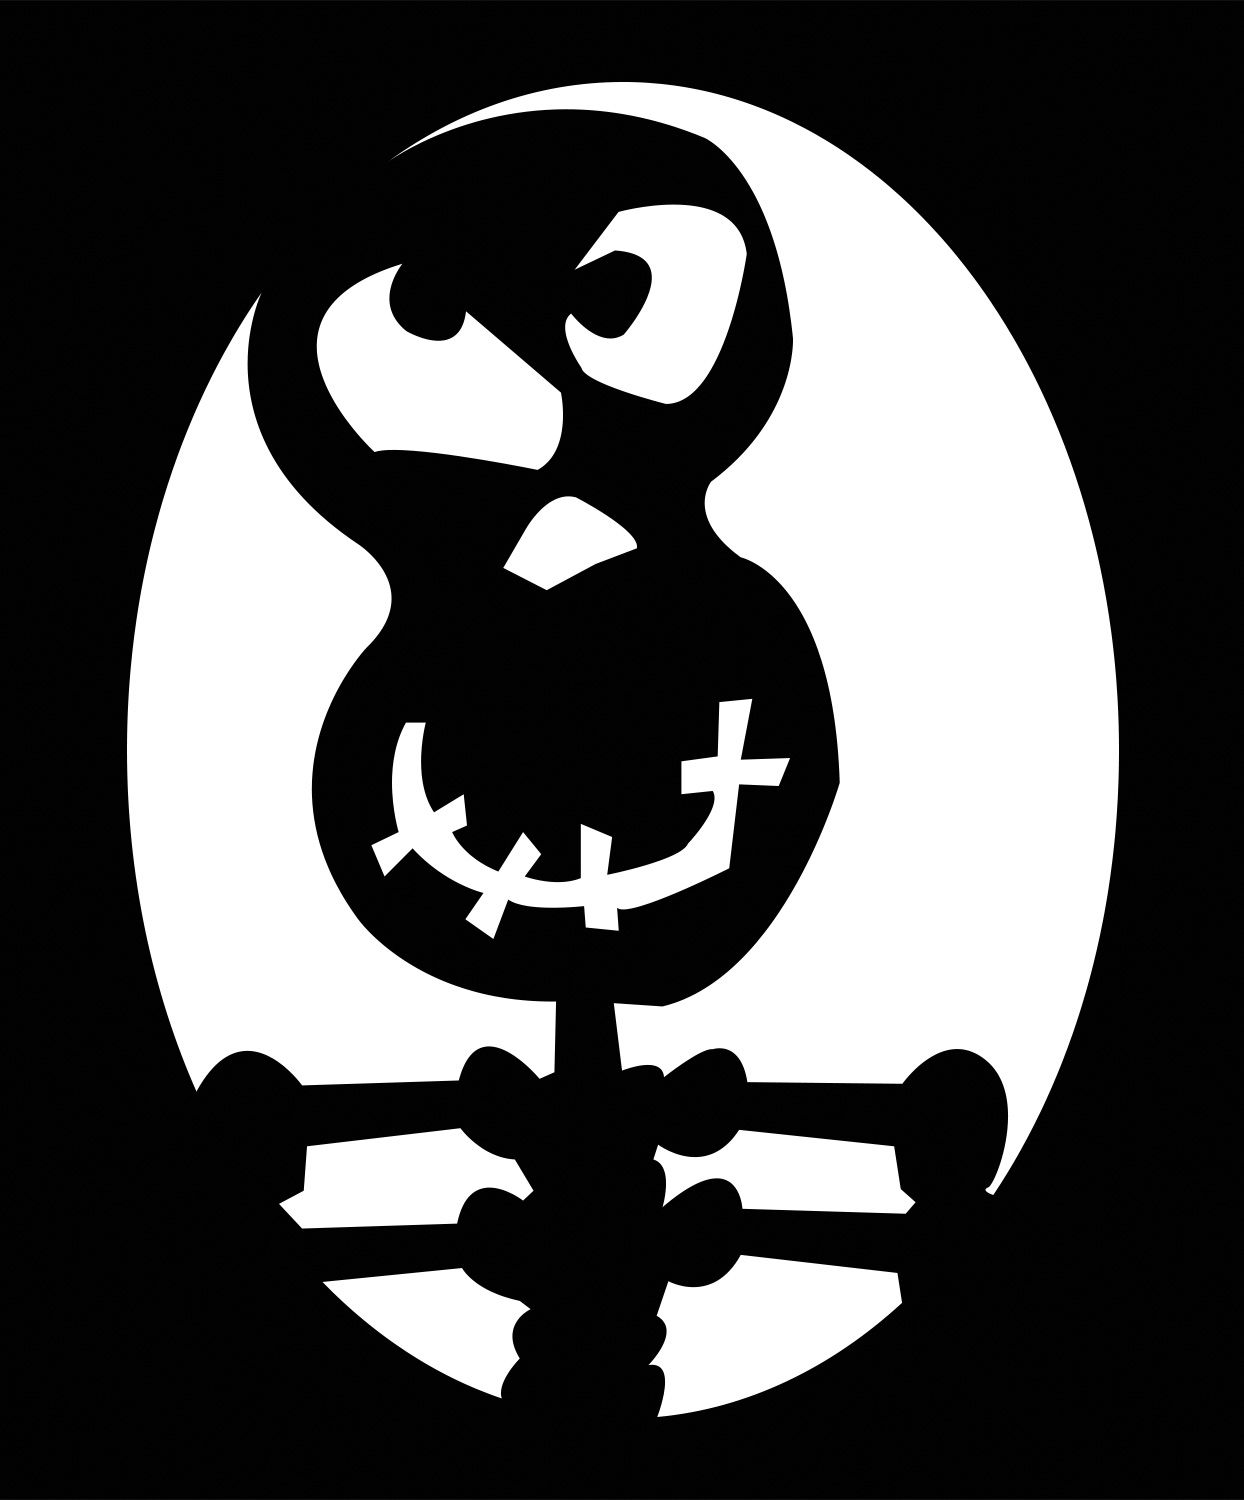 Goofy Skeleton Pumpkin Carving Stencil